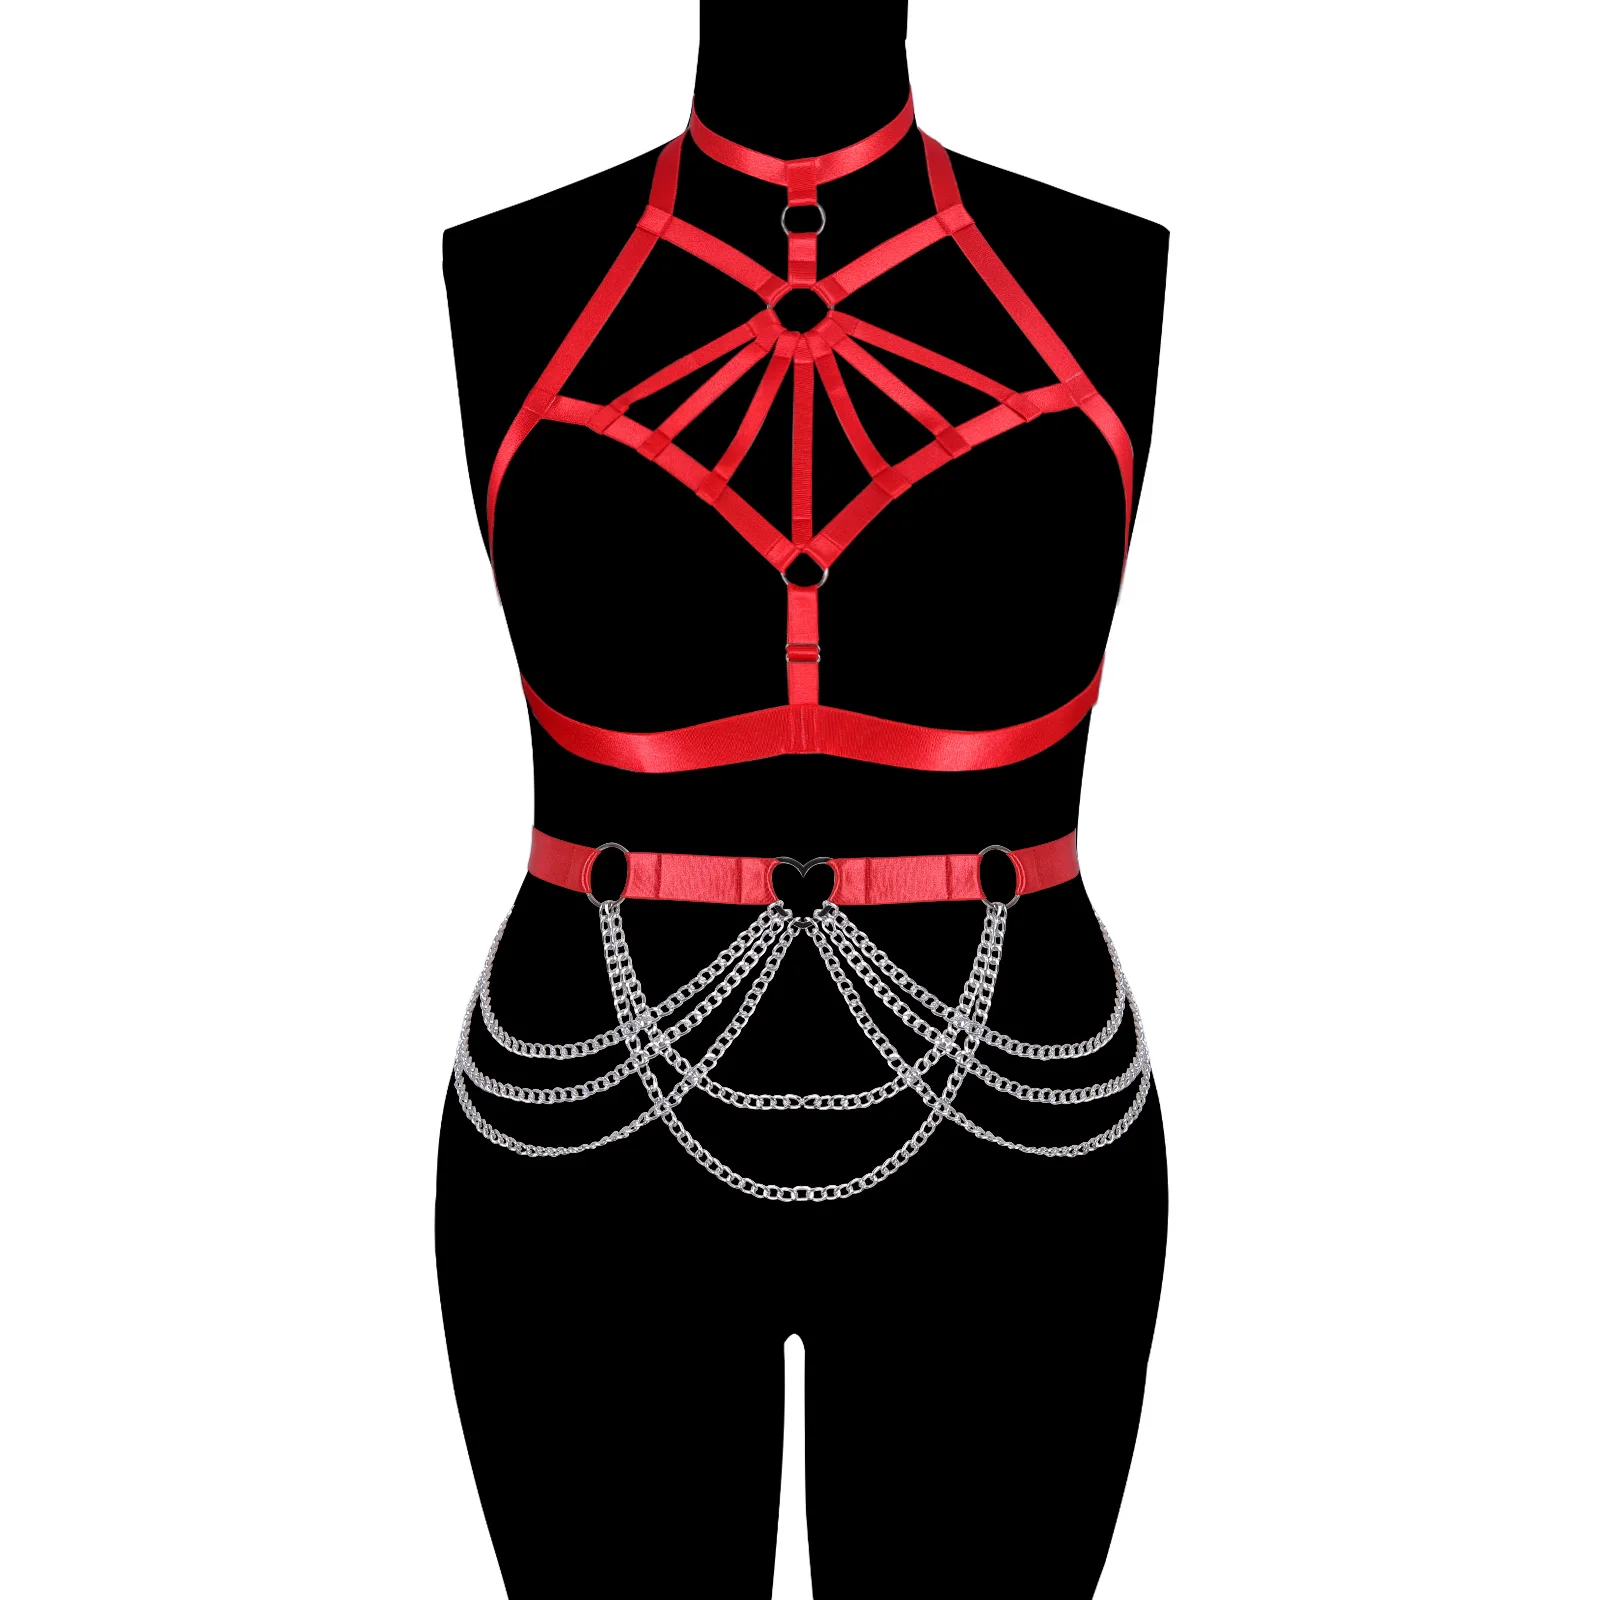 

Women Sexy Lingerie Red Body Harness Bodysuit Adjust Bondage Harness Bra Leg Garter Belt Punk Goth Body Cage Suit